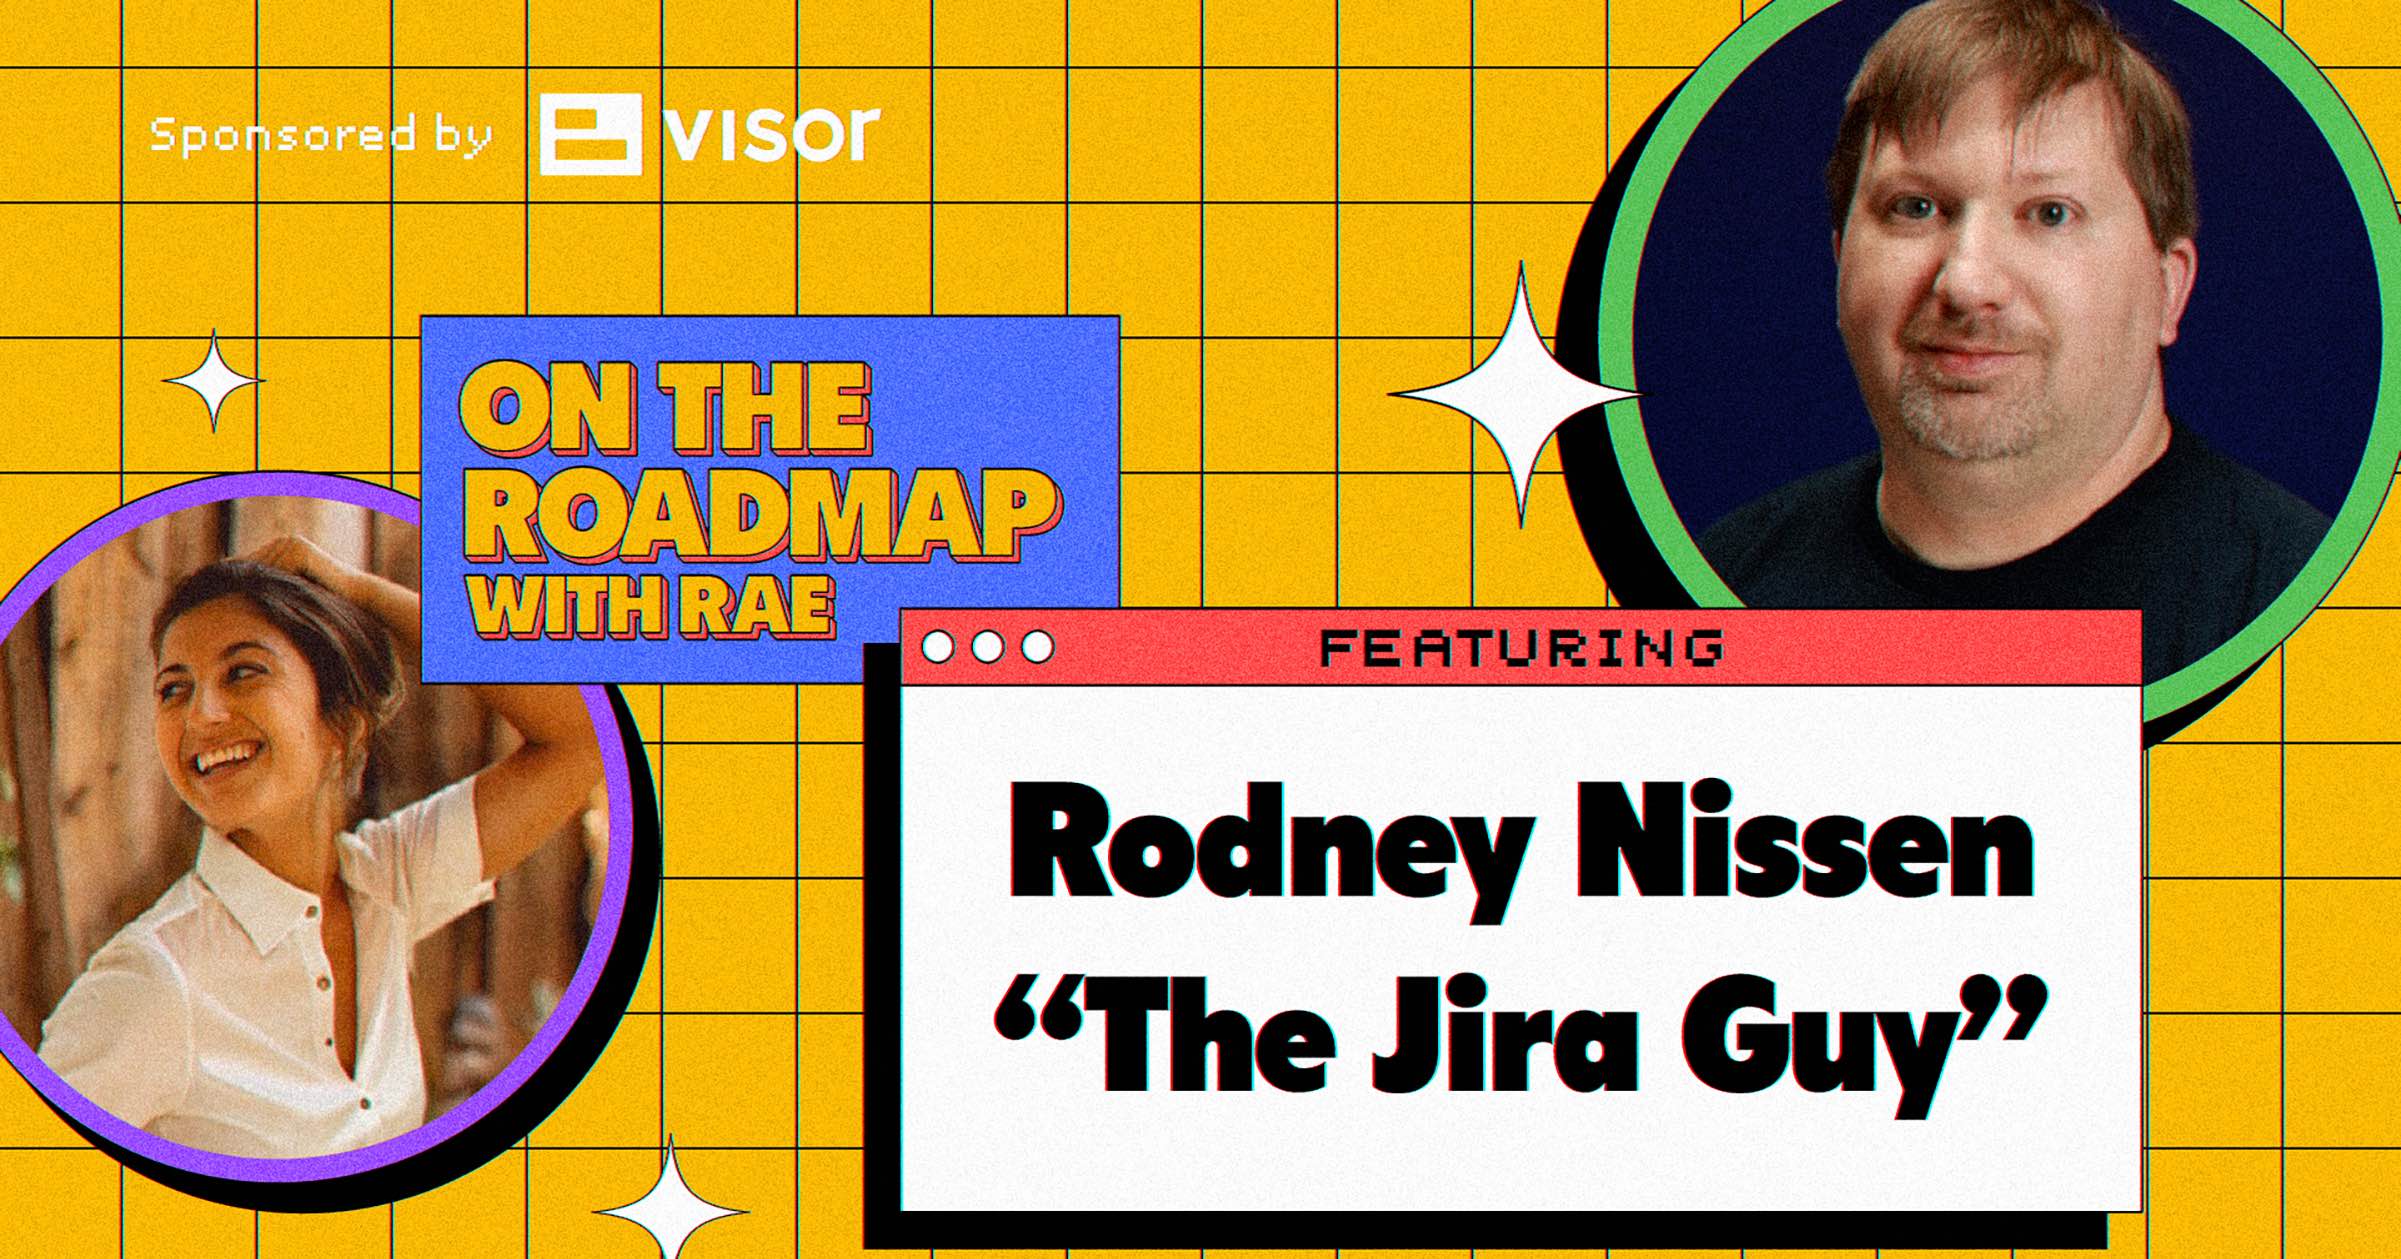 otr podcast guest rodney nissen "the jira guy"